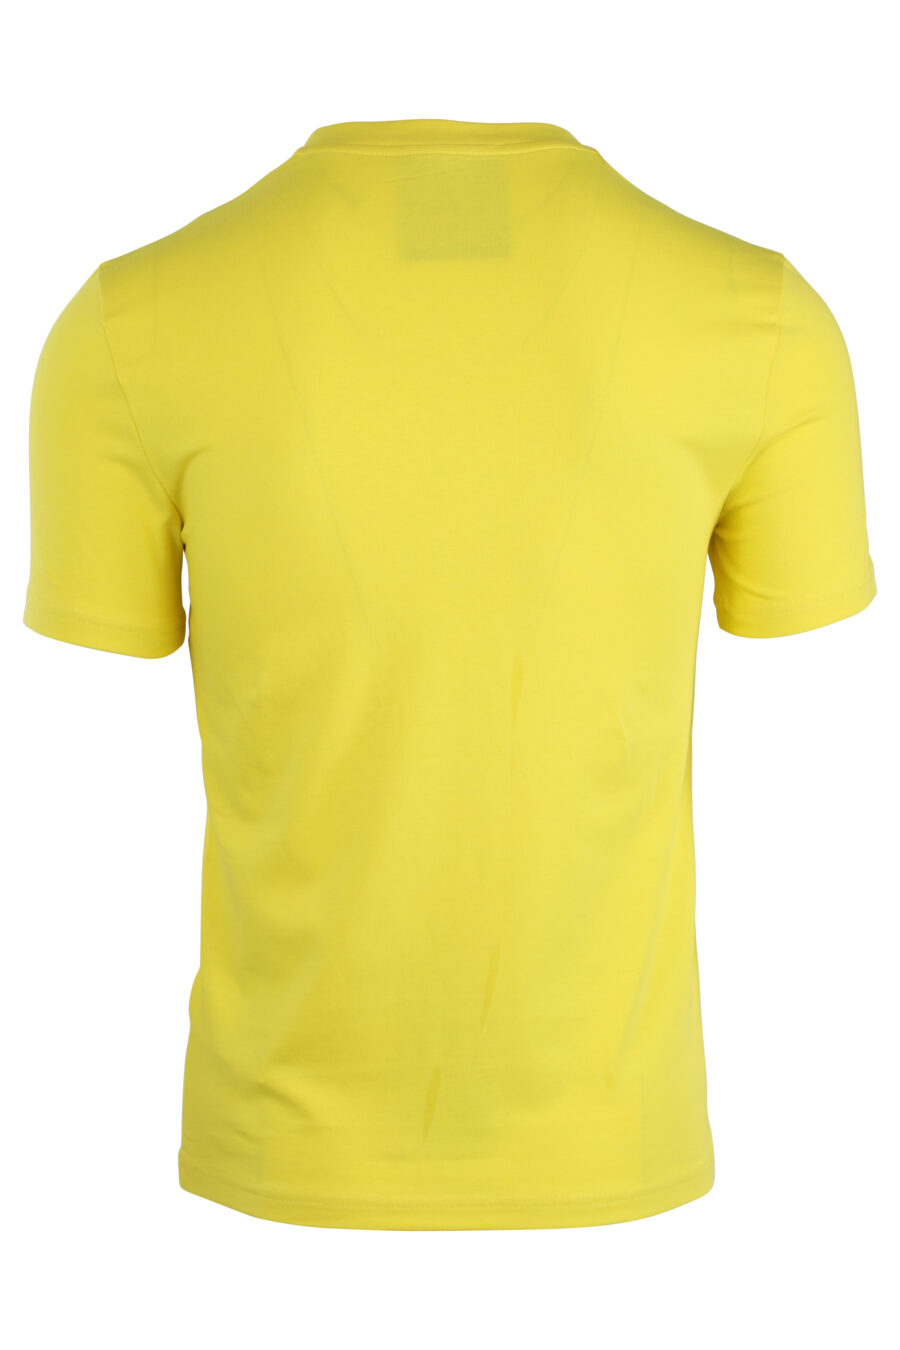 Camiseta amarilla con maxilogo negro - IMG 1661